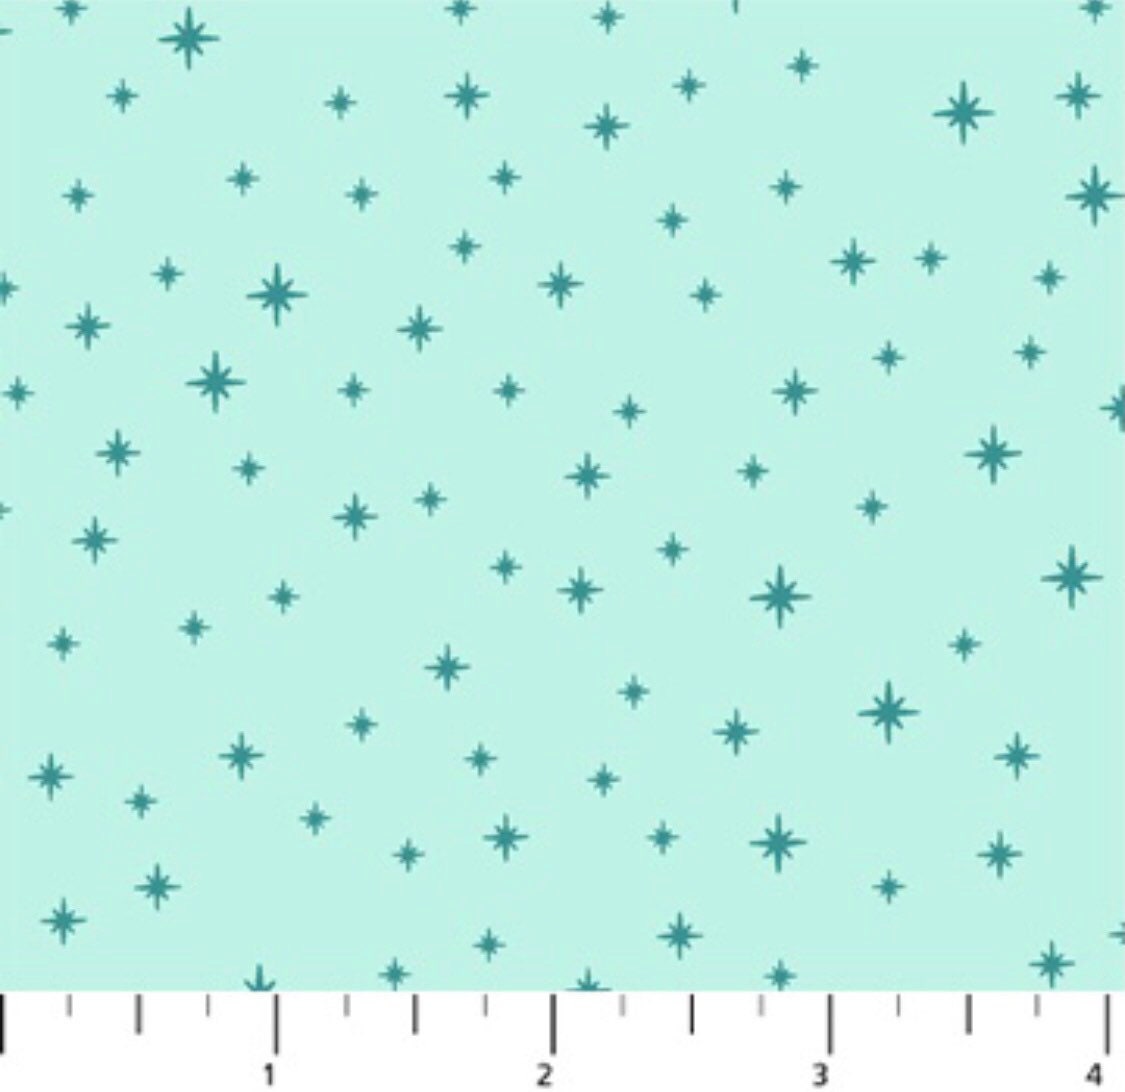 Stars in Green - Peppermint Collection by Dana Willard - Figo Fabrics - 100% Cotton